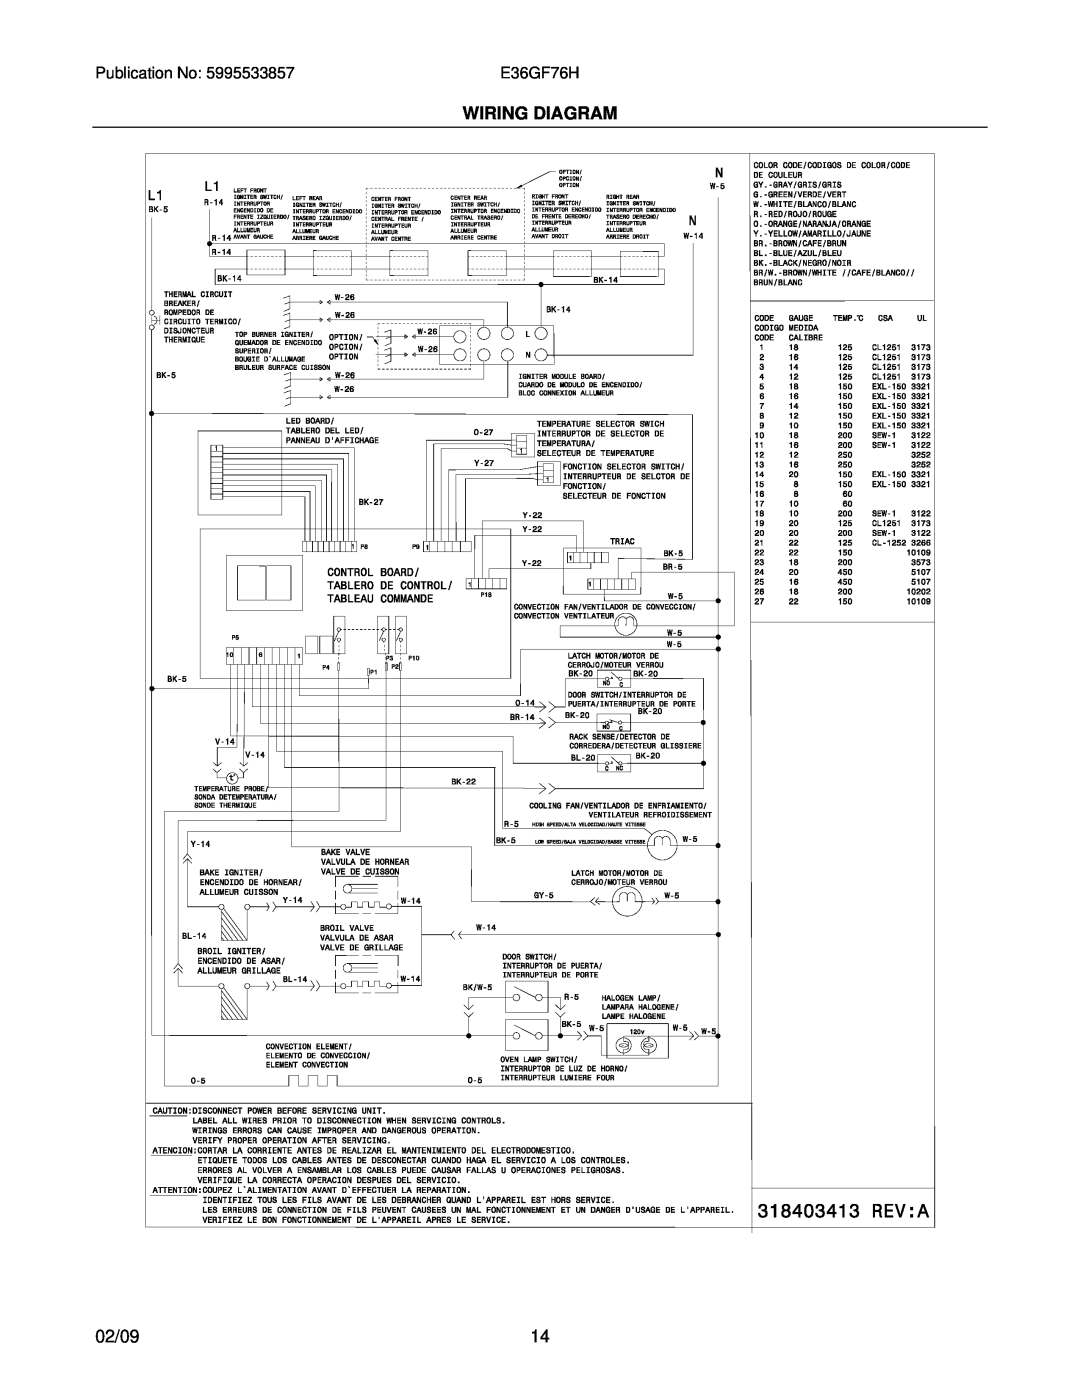 Electrolux 32166696F80S1, E36GF76HPS1, E36GF76HPS2, 32166696F80S2 installation instructions Wiring Diagram, 02/09 